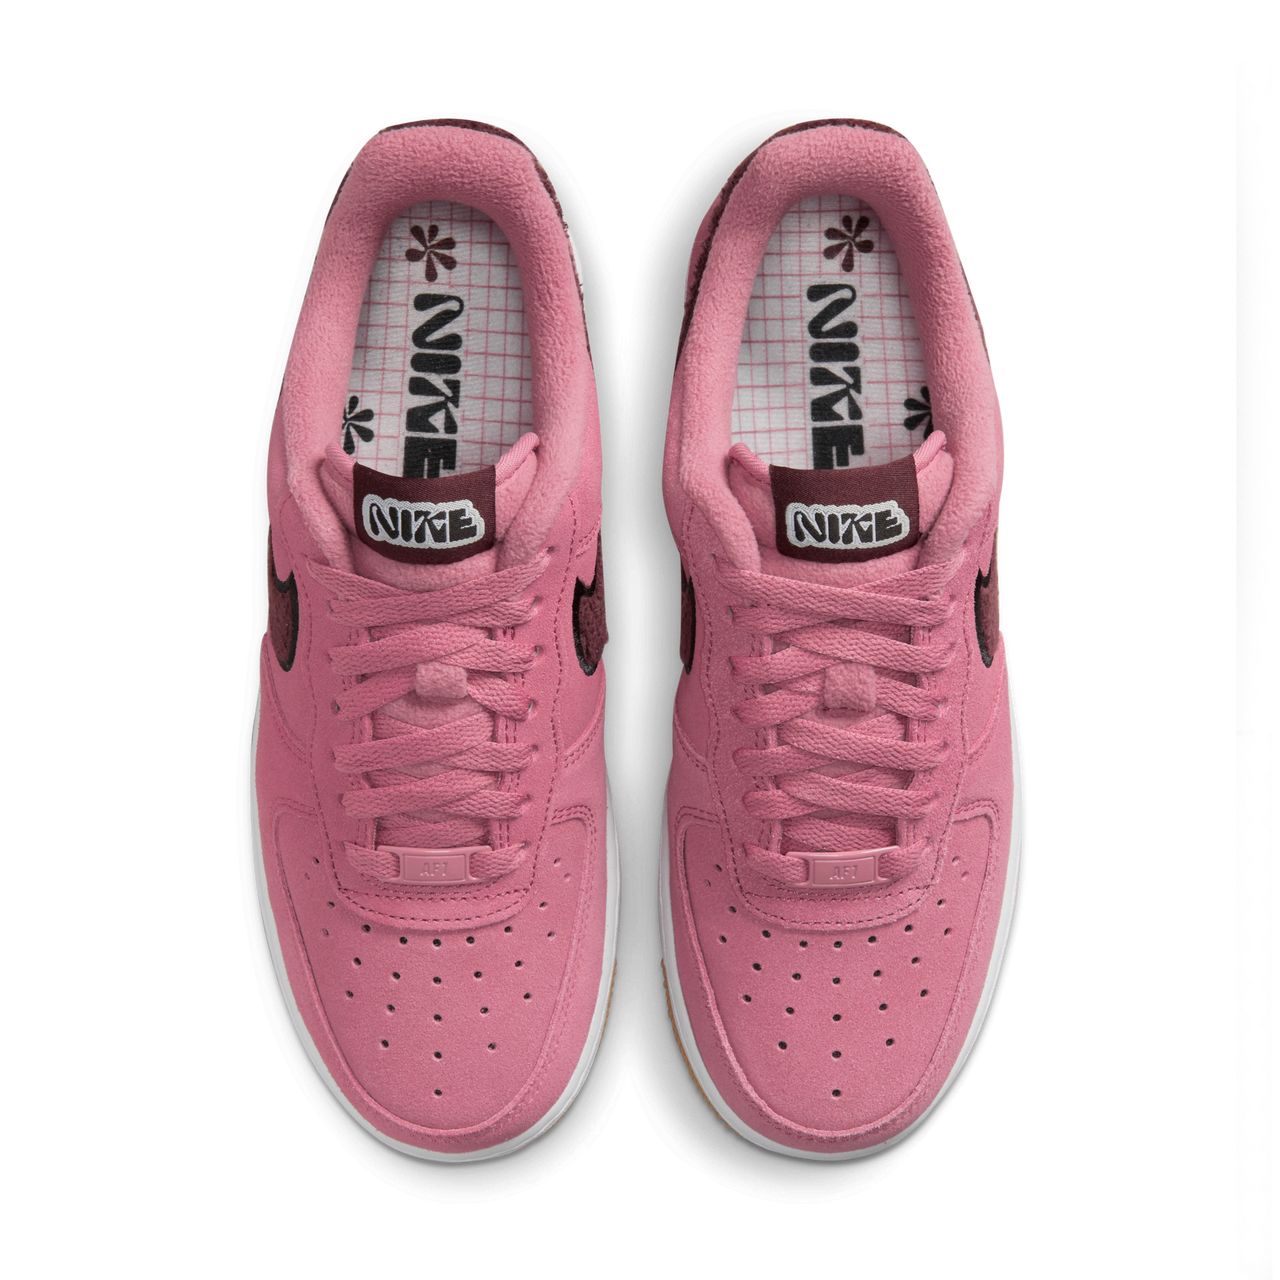 Nike Air Force 1 '07 SE Damenschuh - Pink